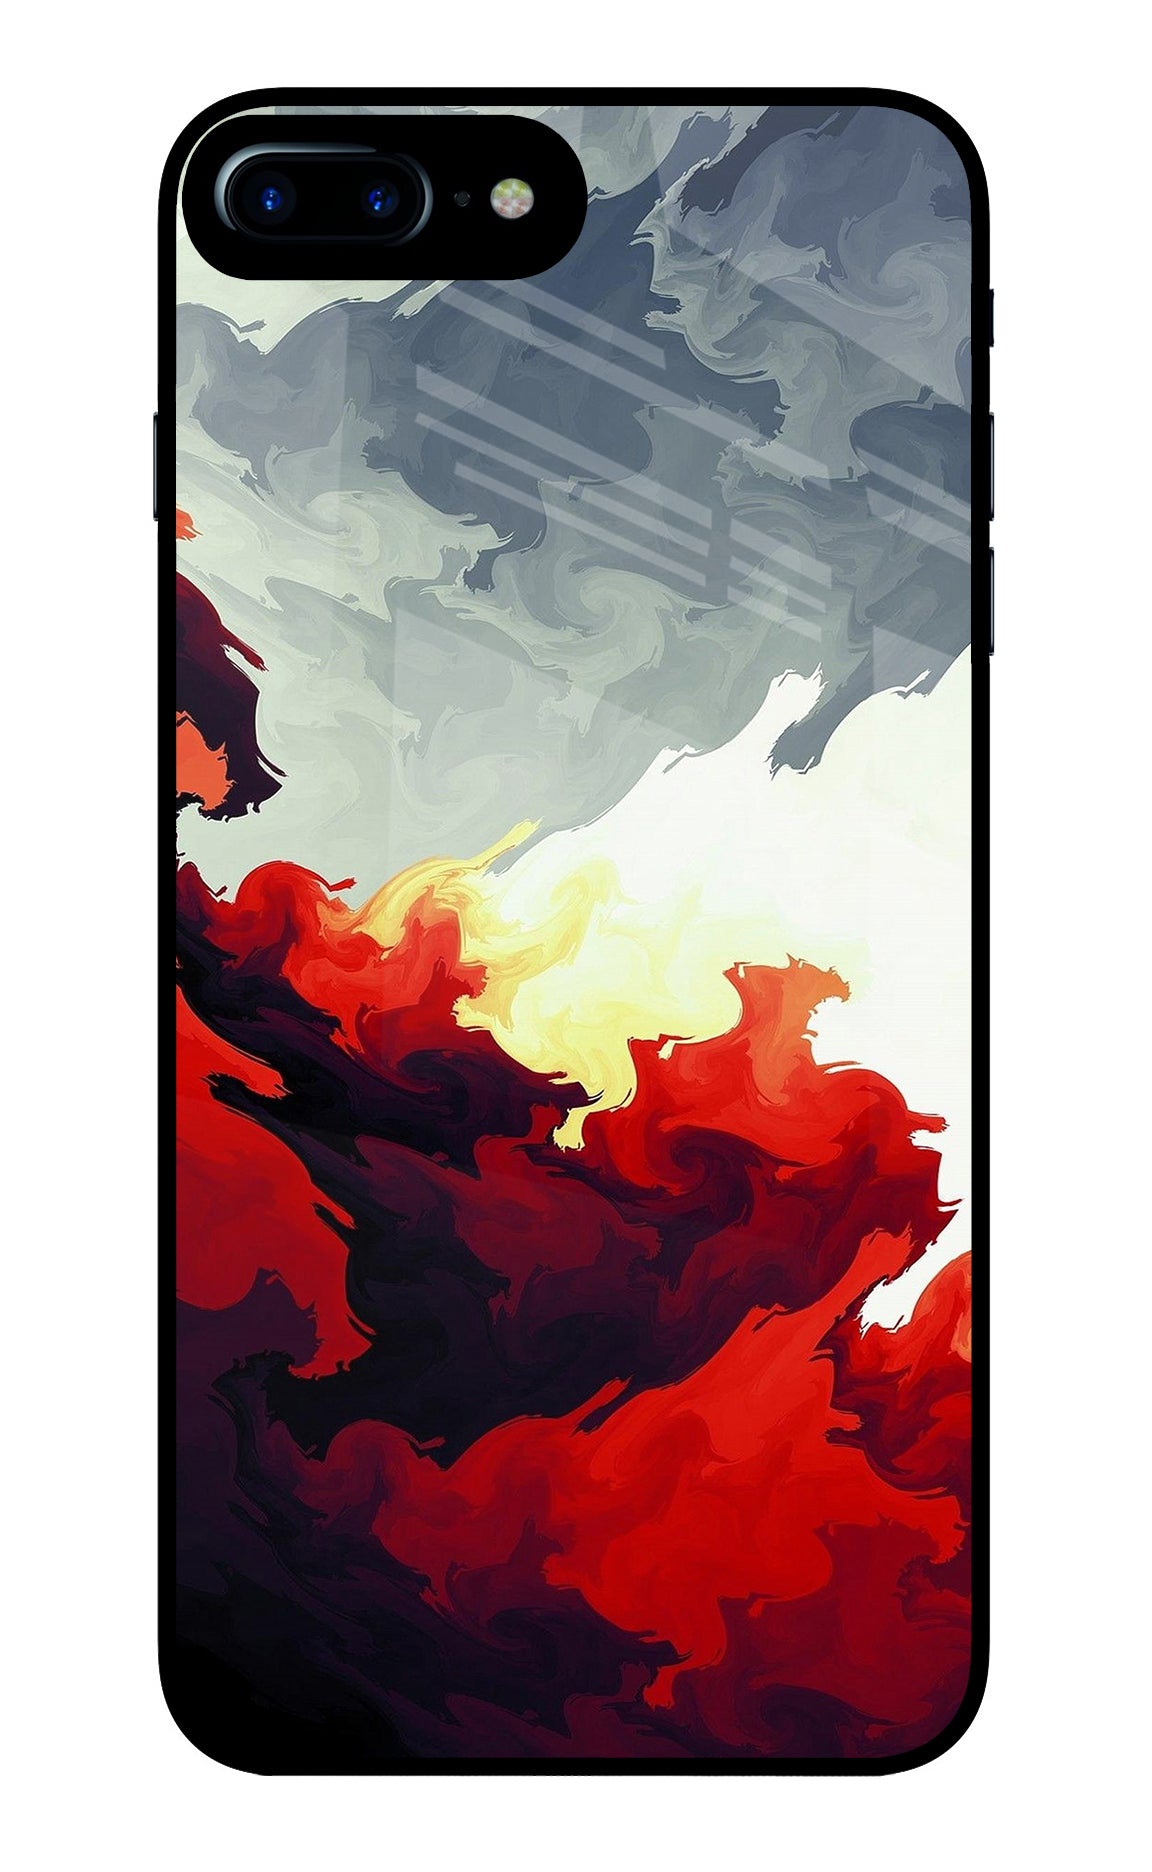 Fire Cloud iPhone 8 Plus Glass Case